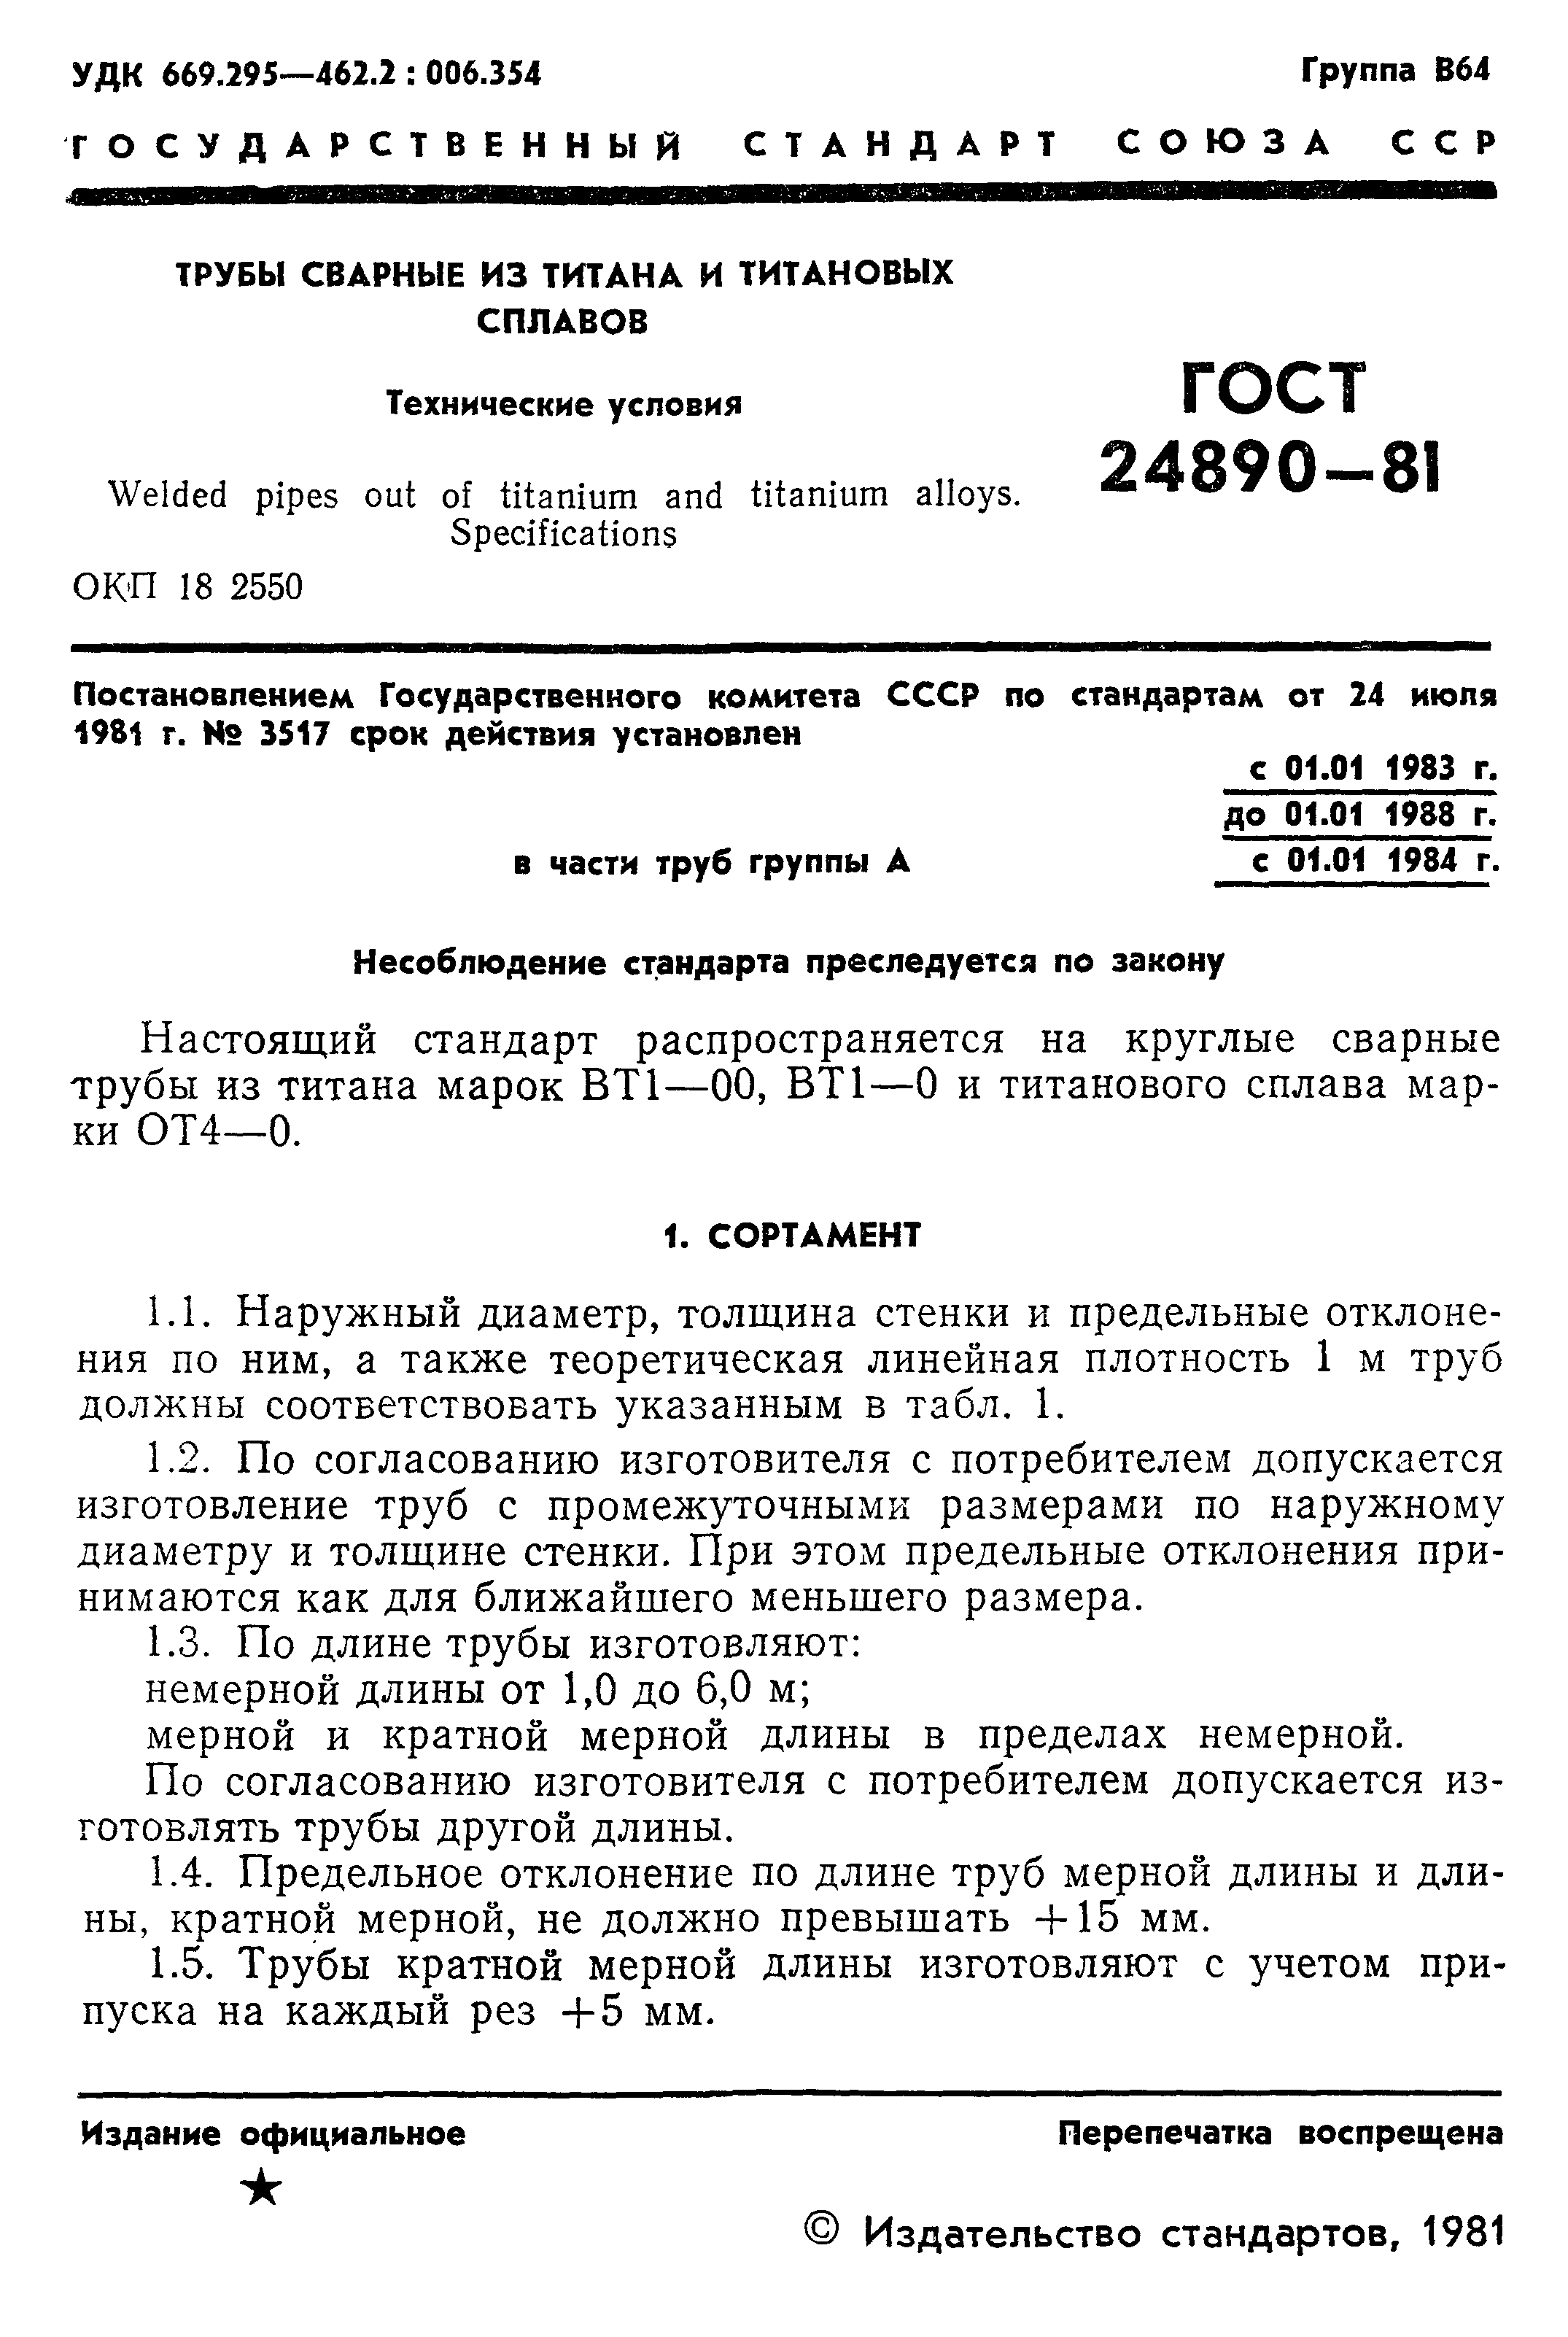 ГОСТ 24890-81